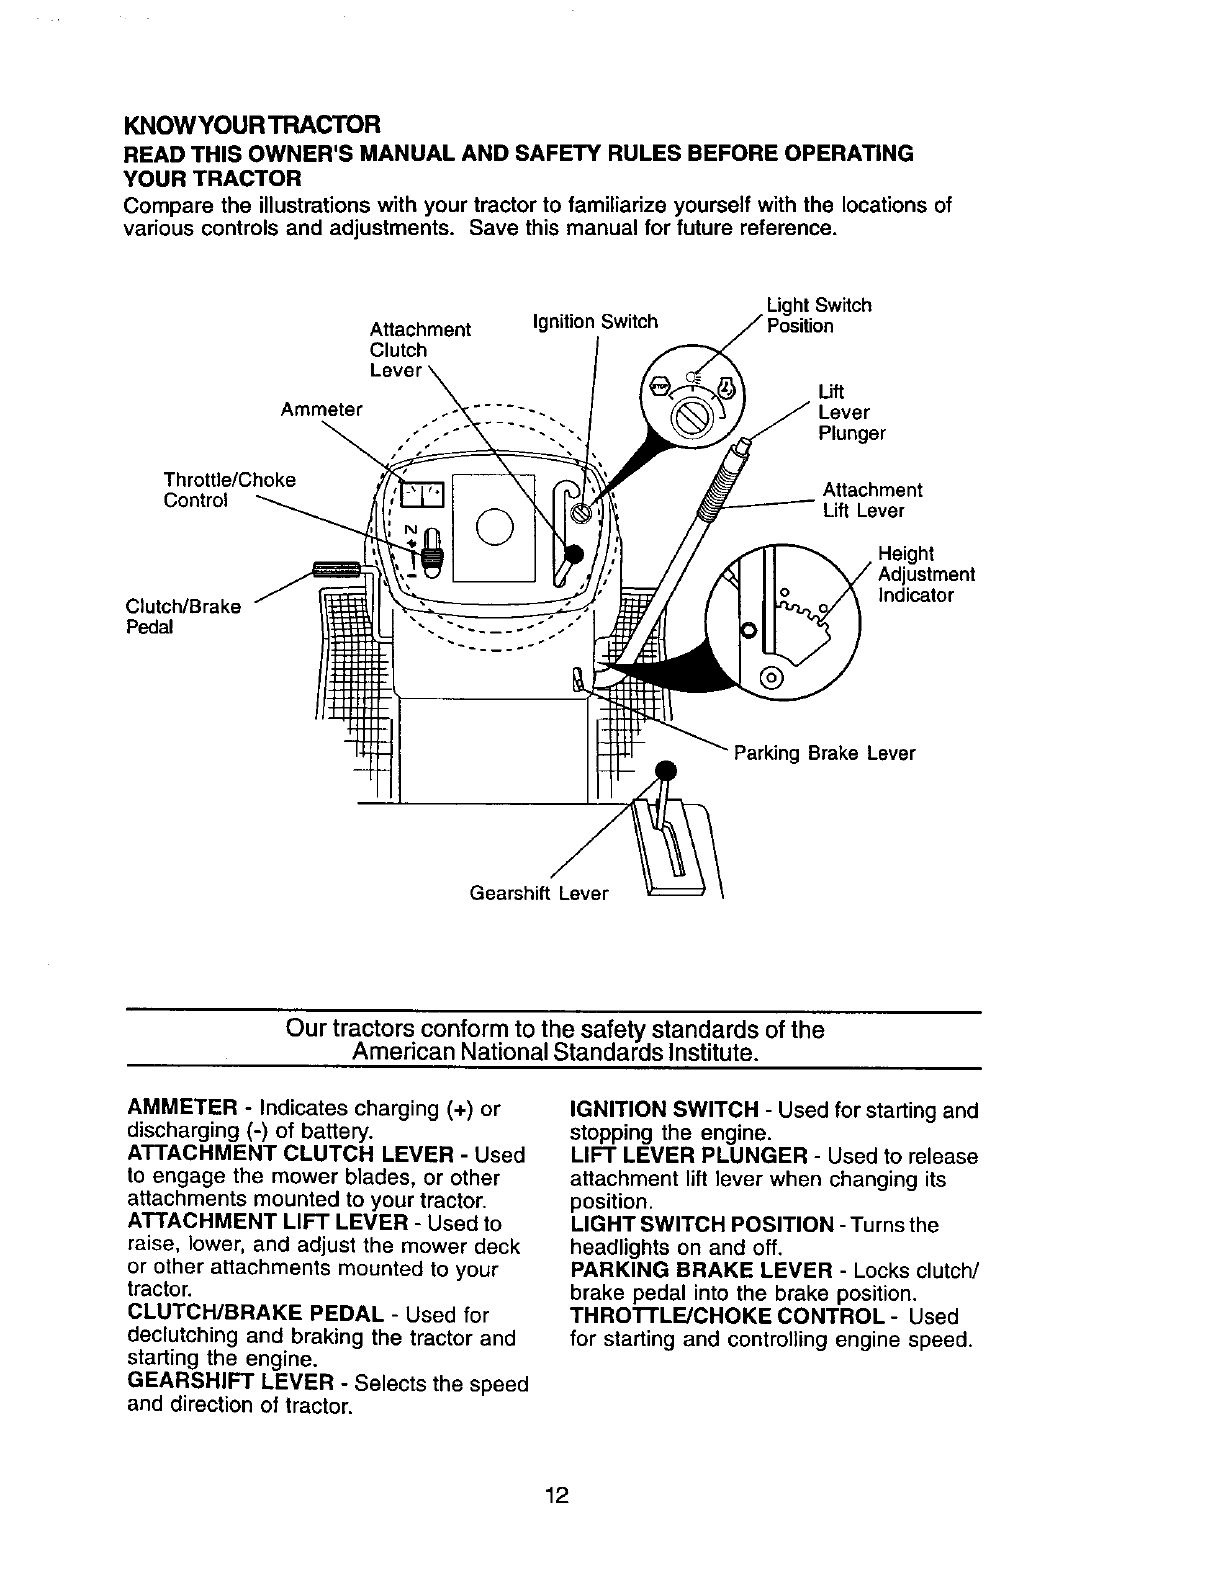 american yard products manual